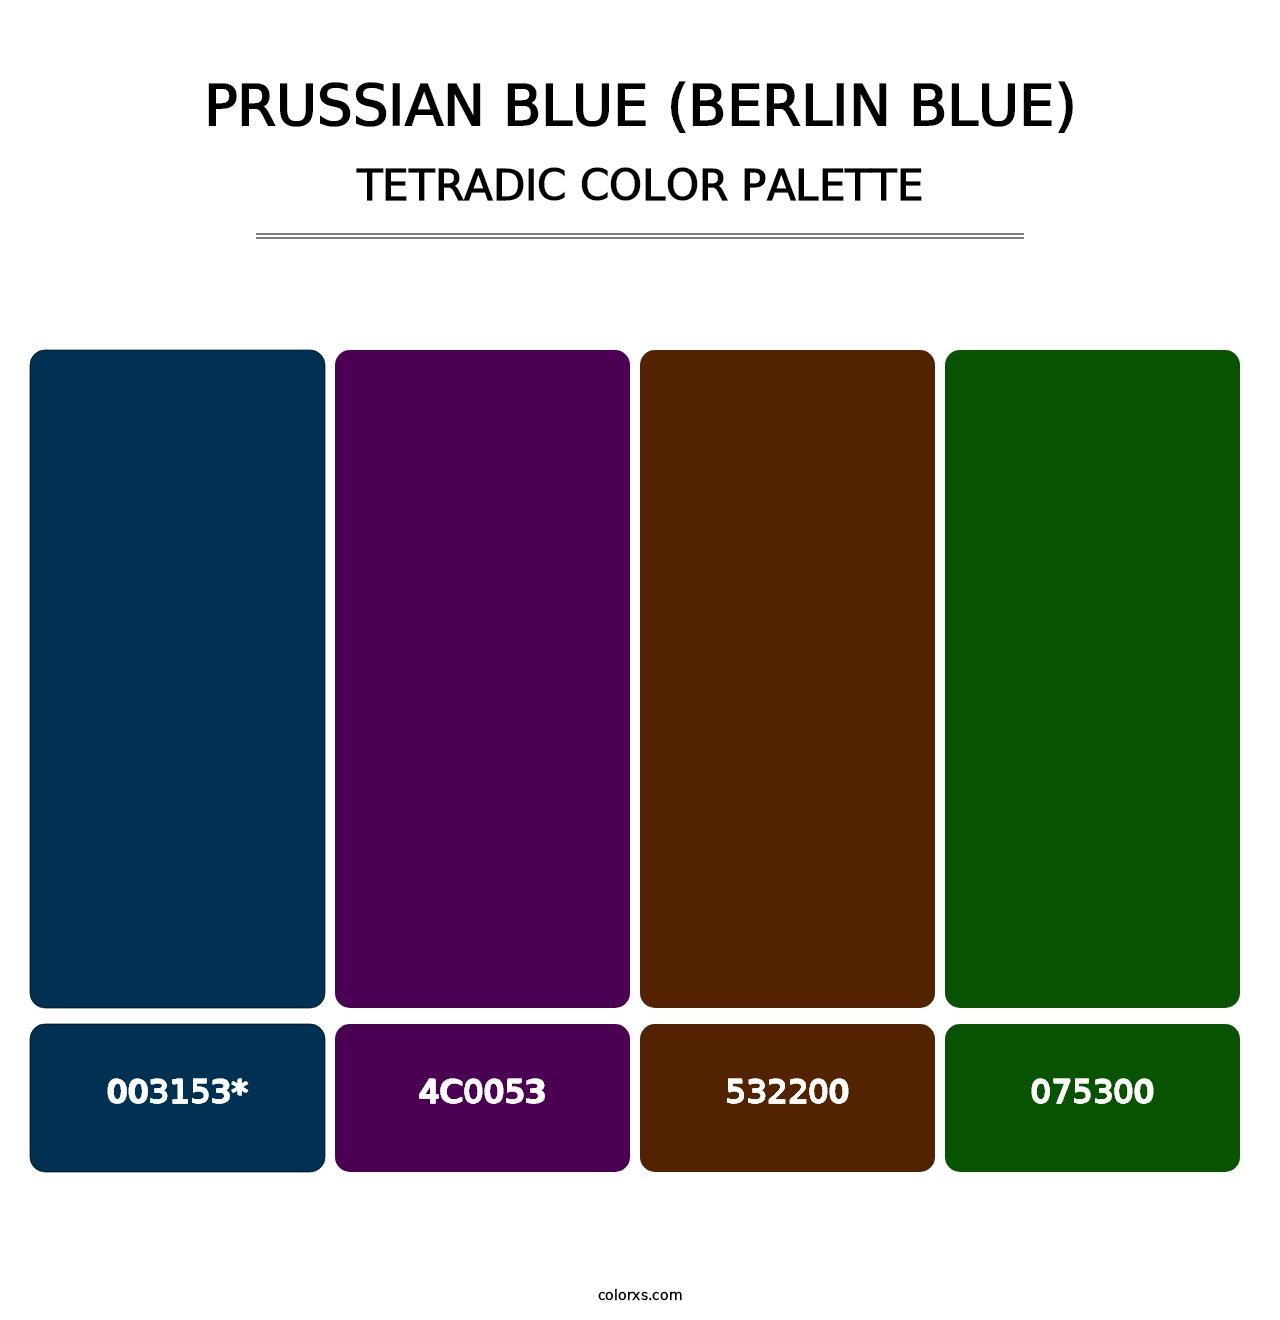 Prussian Blue (Berlin Blue) - Tetradic Color Palette